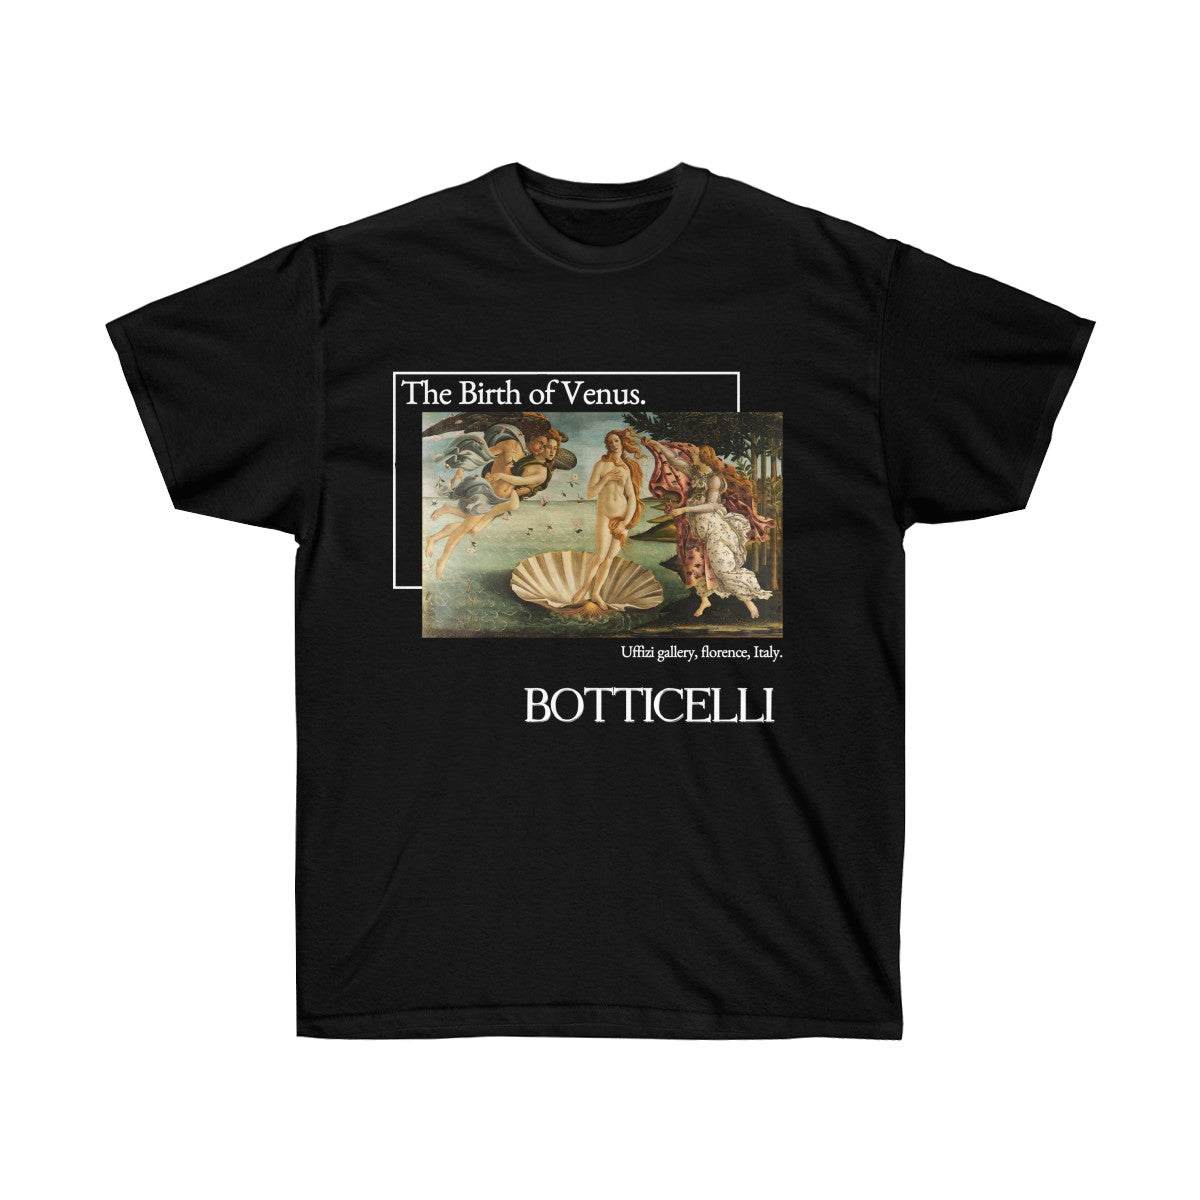 Botticelli Shirt - The Birth of Venus